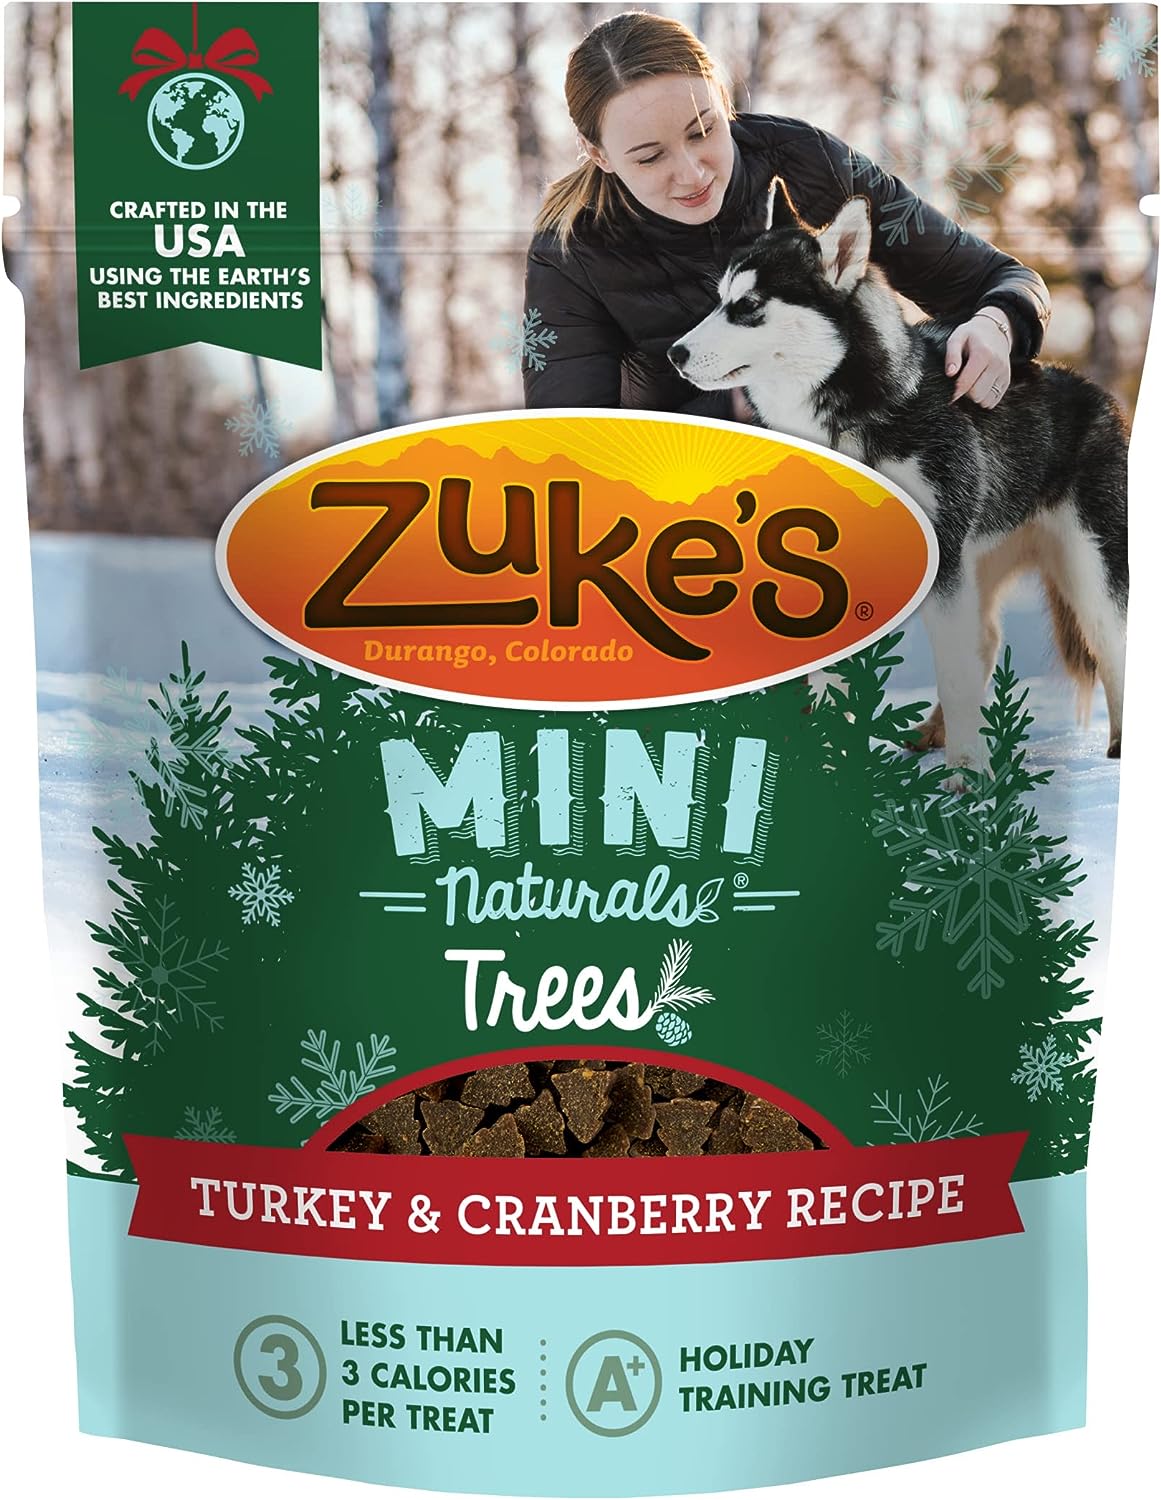 Zuke's Mini Naturals Trees Dog Training Treats ($7.99)